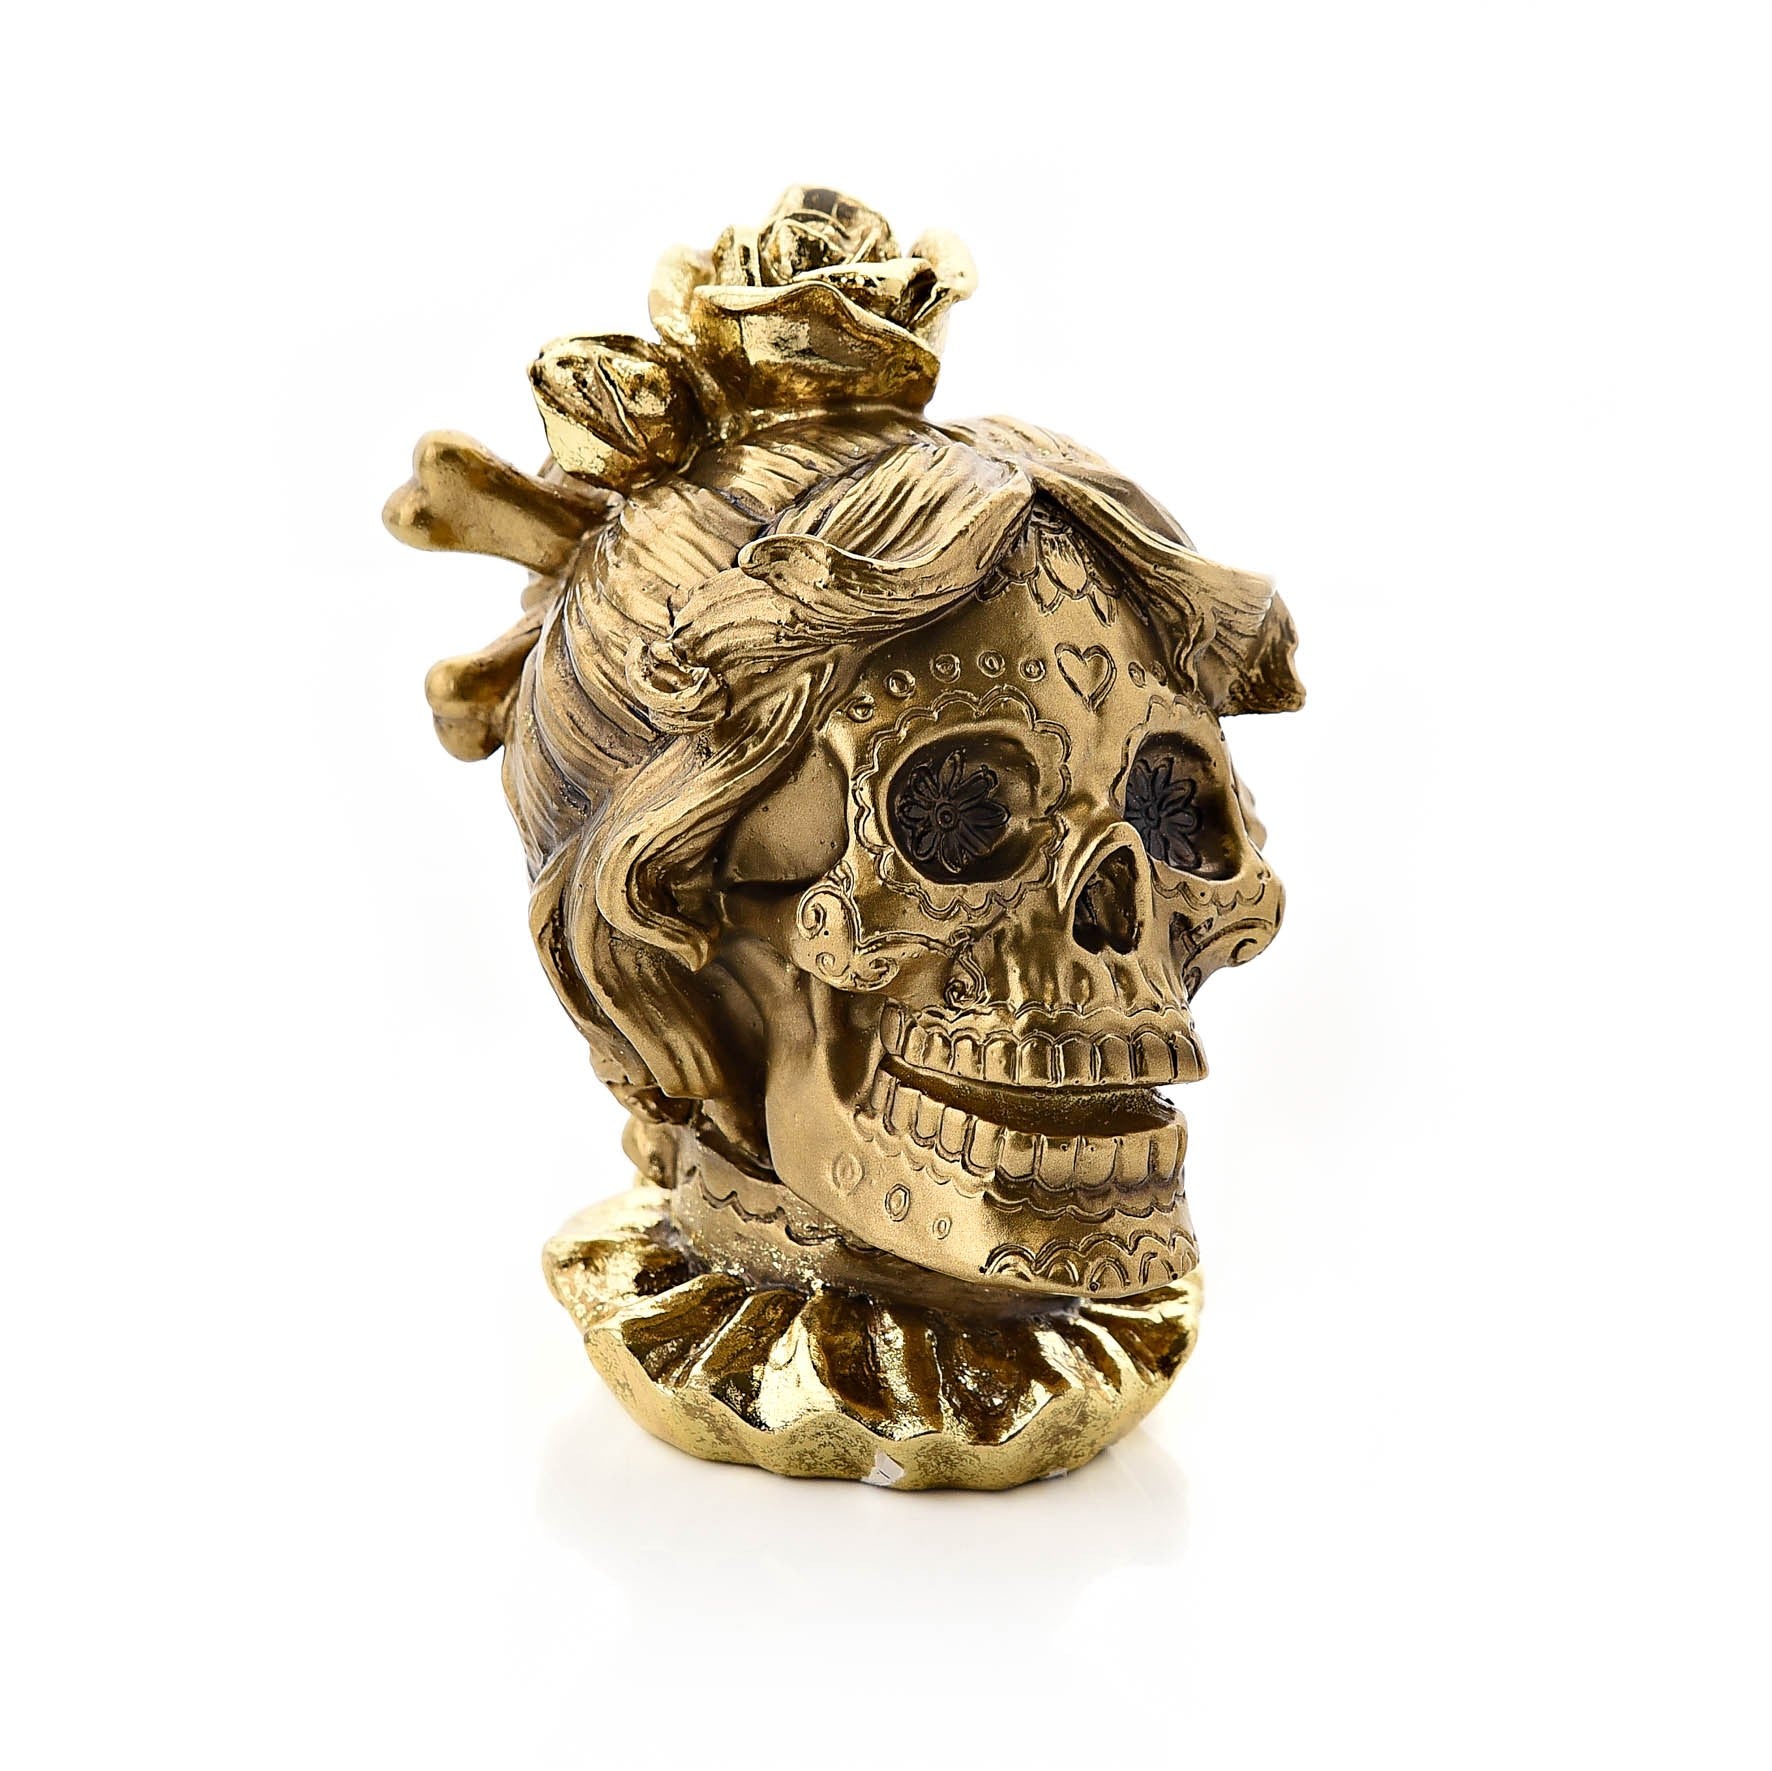 View Gold Skull Resin Figurine information